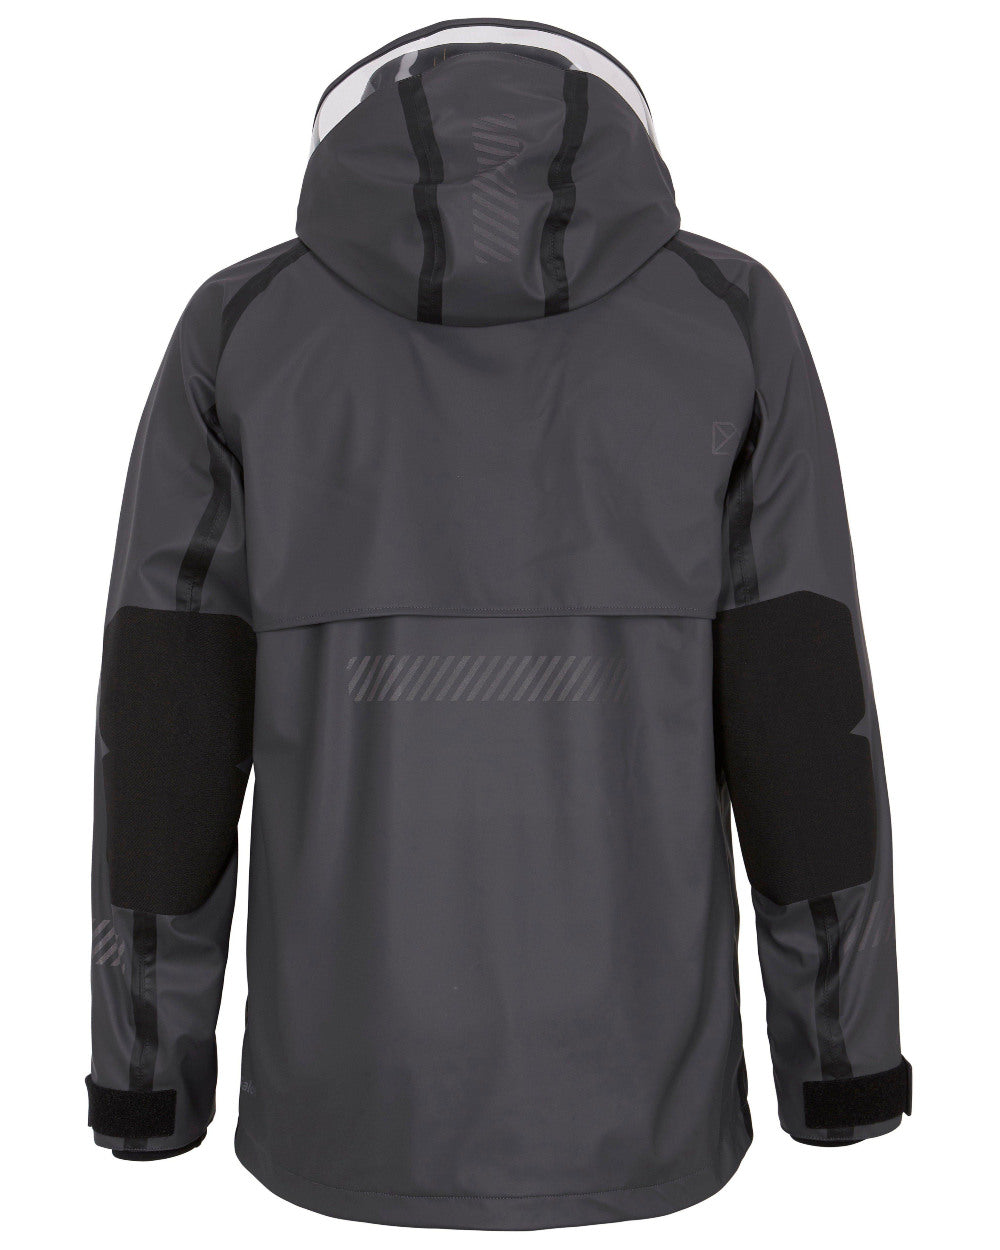 Coal Black Coloured Didriksons Element 2.0 Unisex Jacket On A White Background